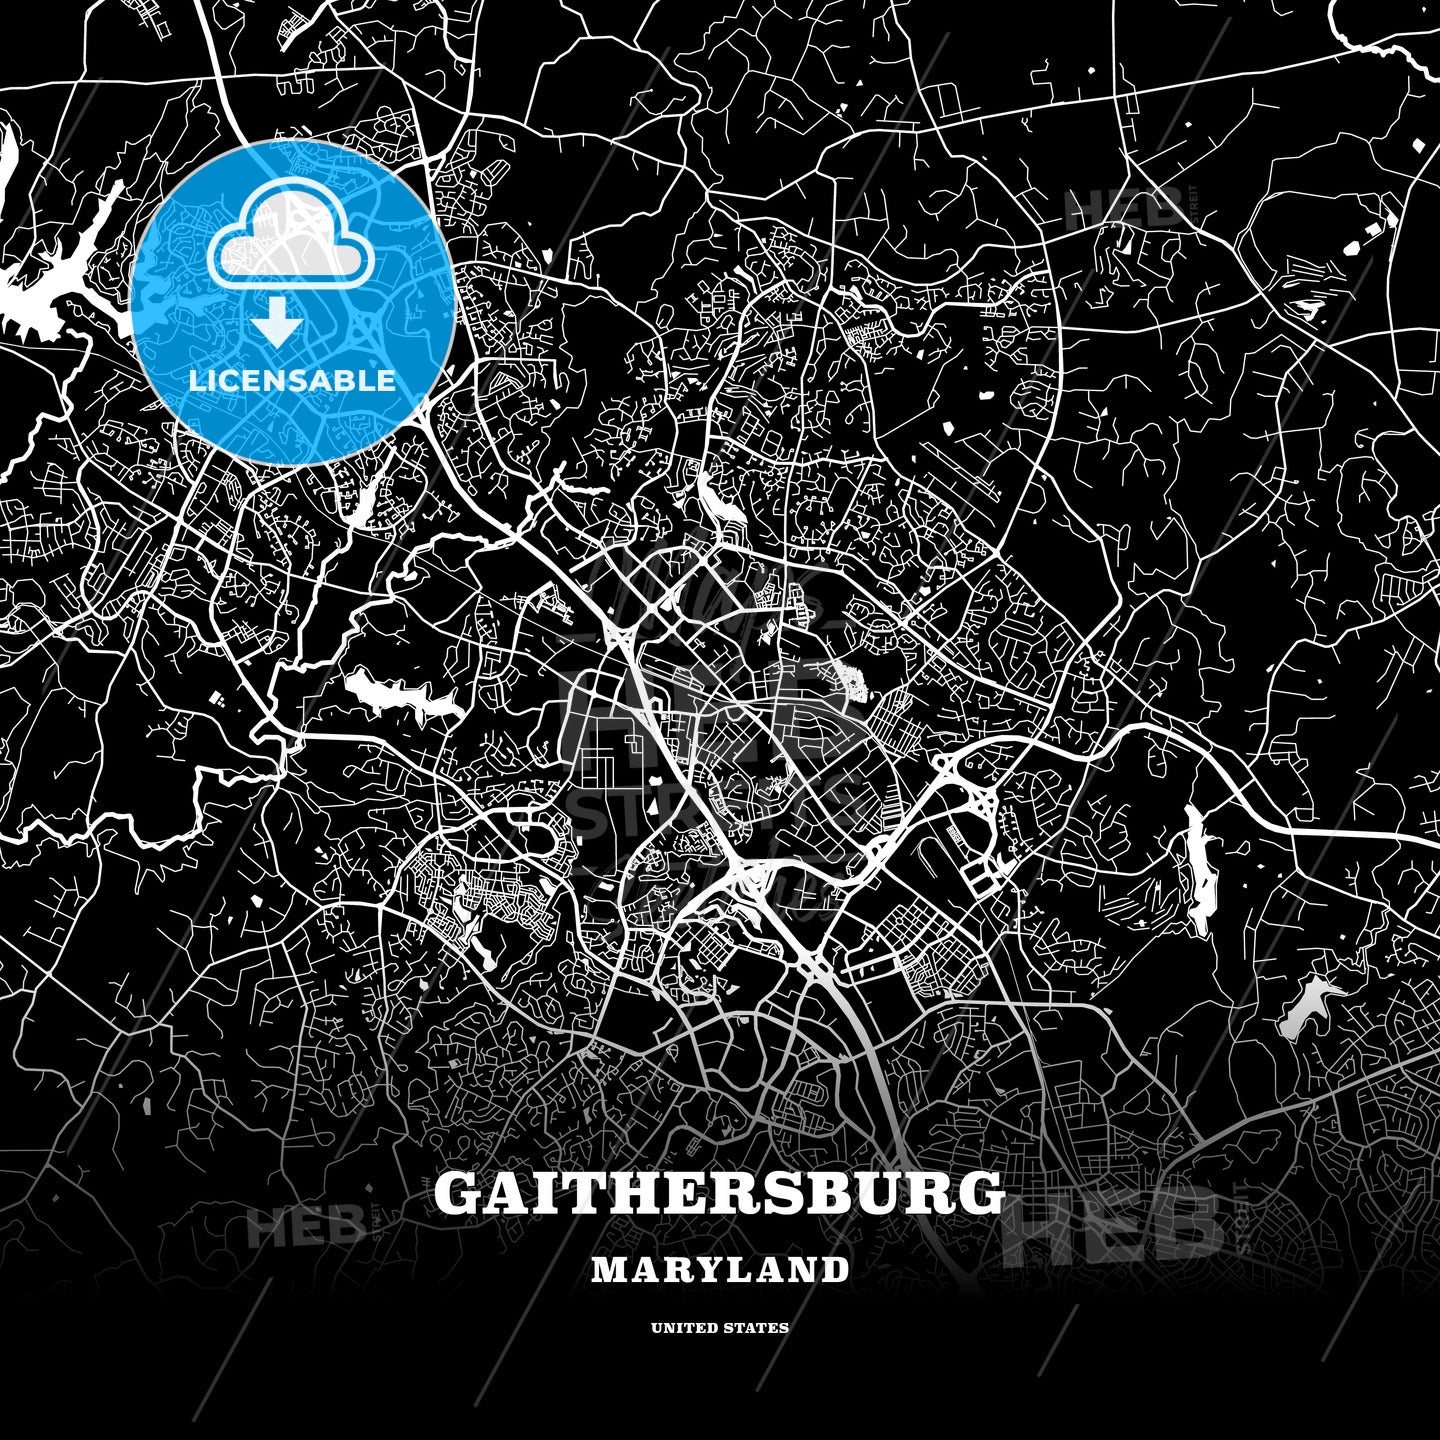 Gaithersburg, Maryland, USA map